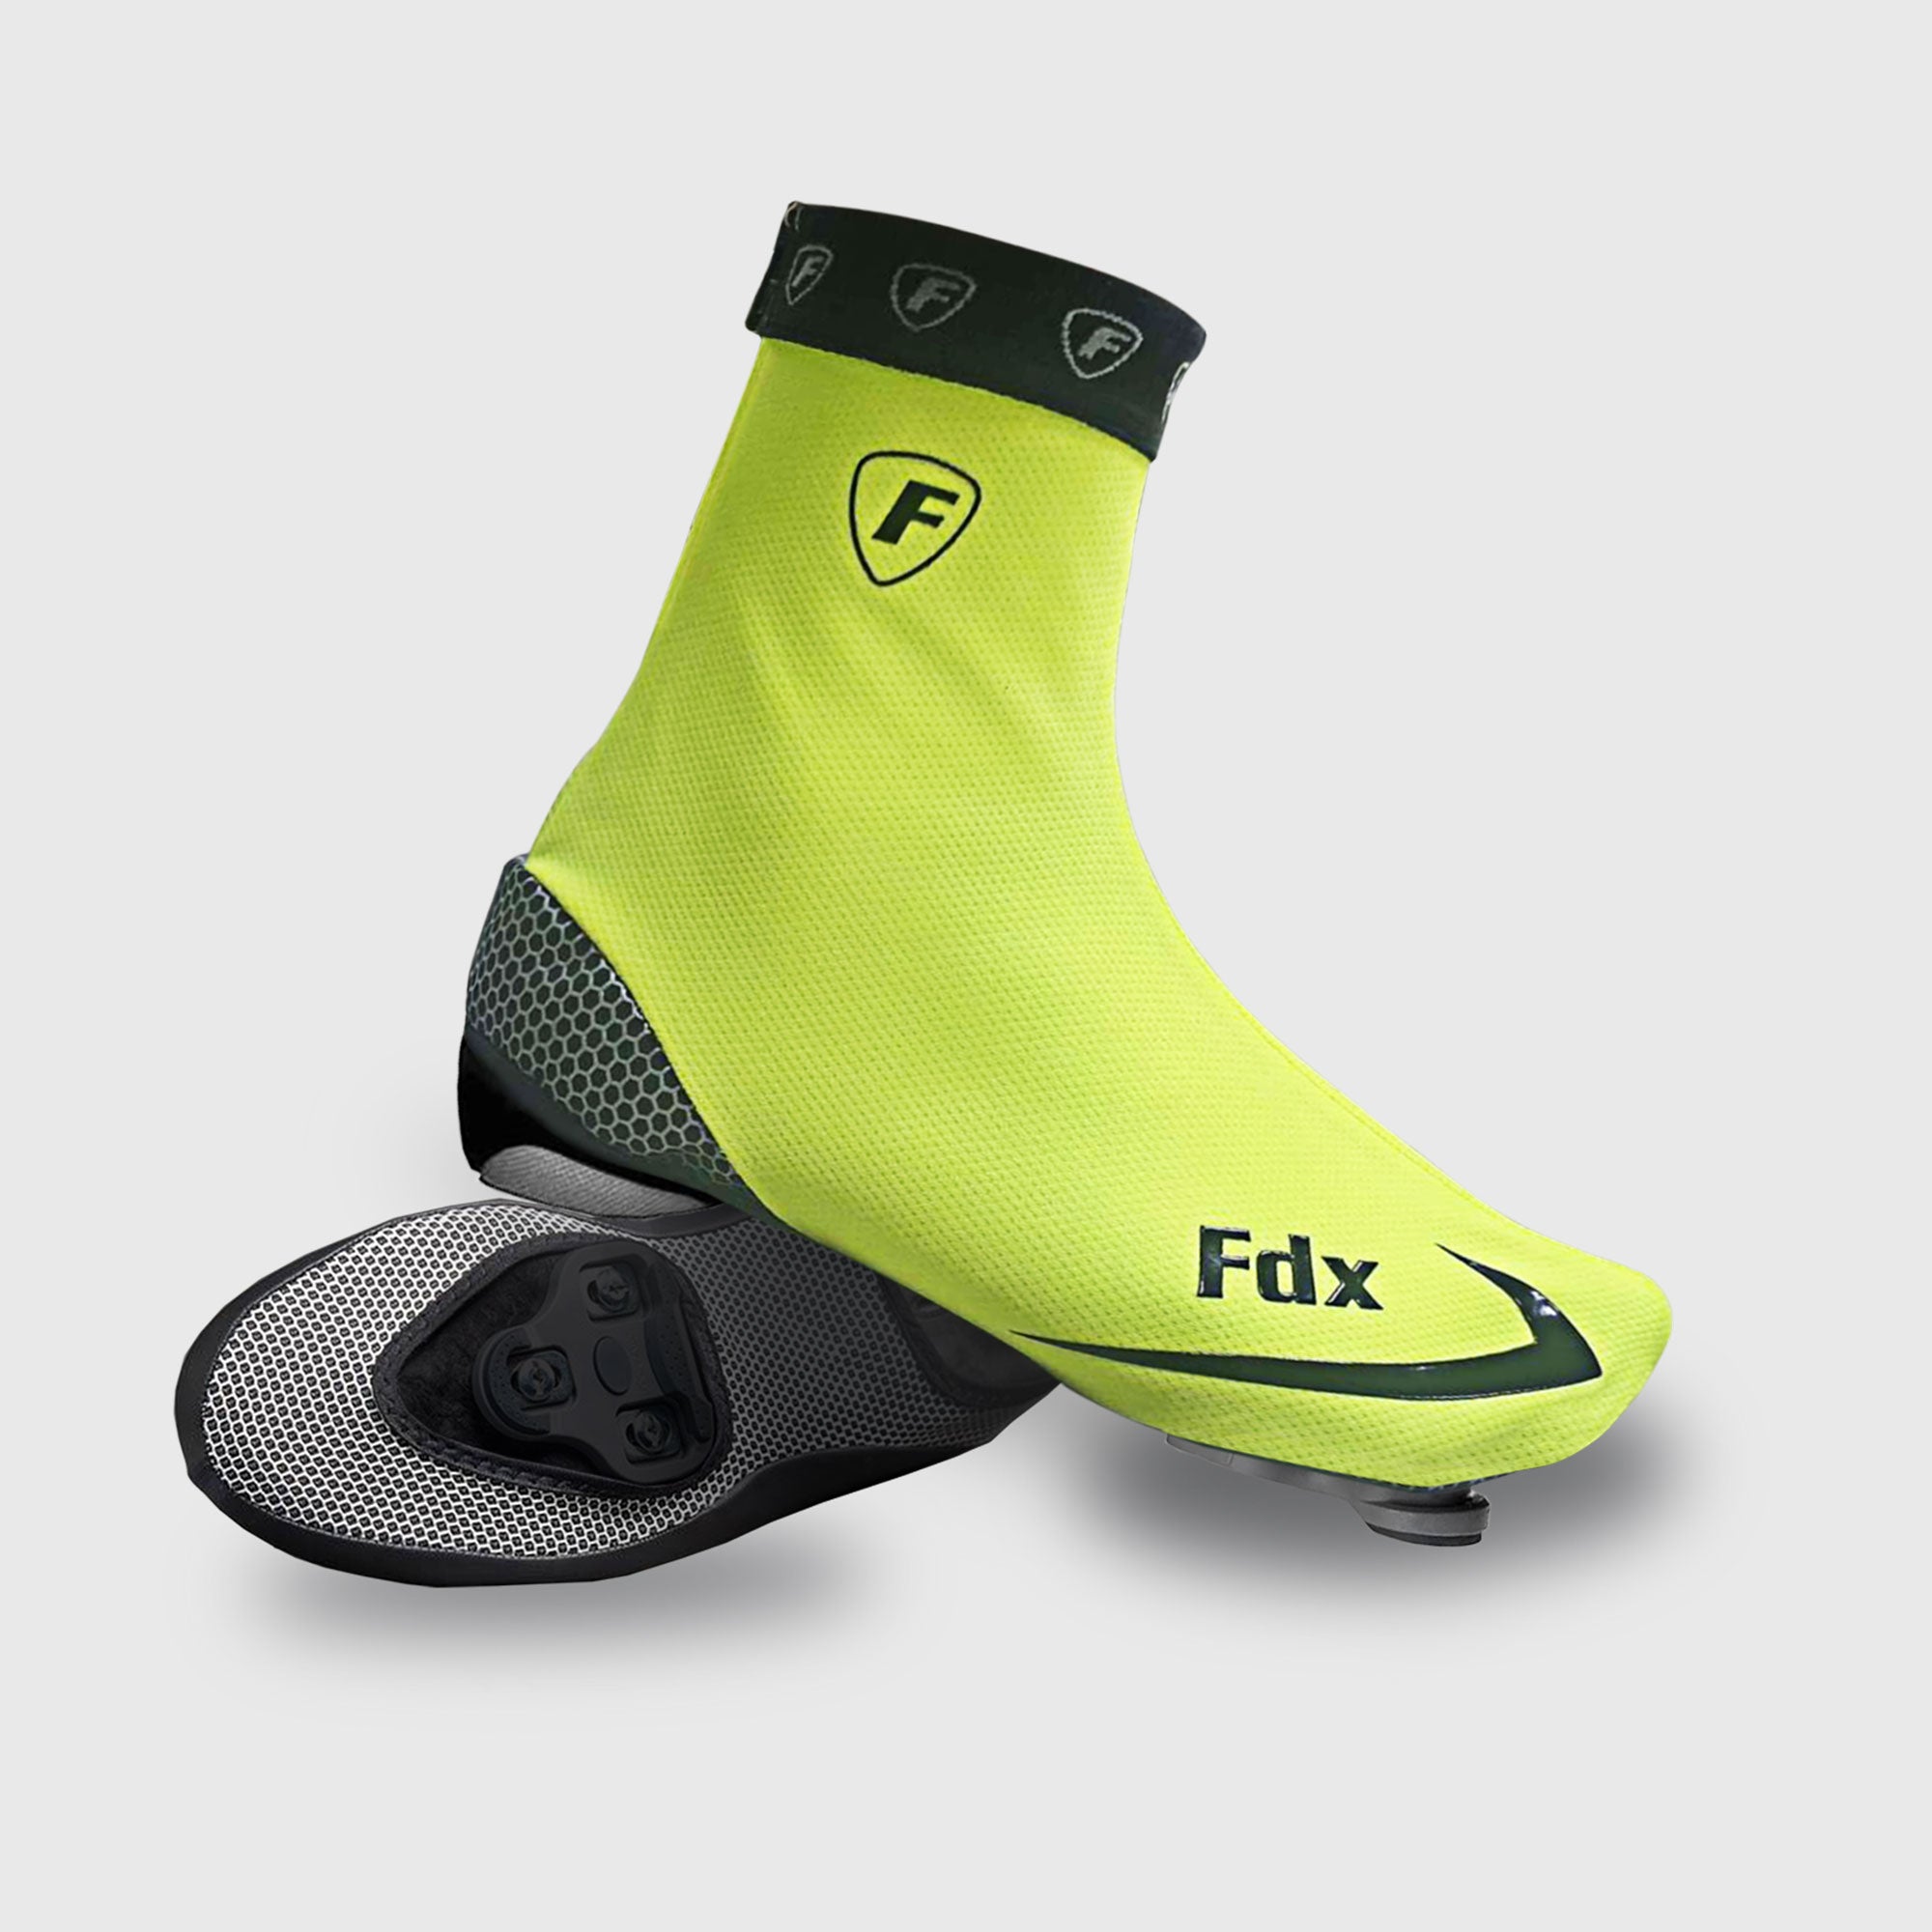 Fdx Unisex Fluorescent Yellow Cycling Over Shoe Breathable Lightweight Rainproof Hi Viz Reflective Details Men Women Cycling Gear UK